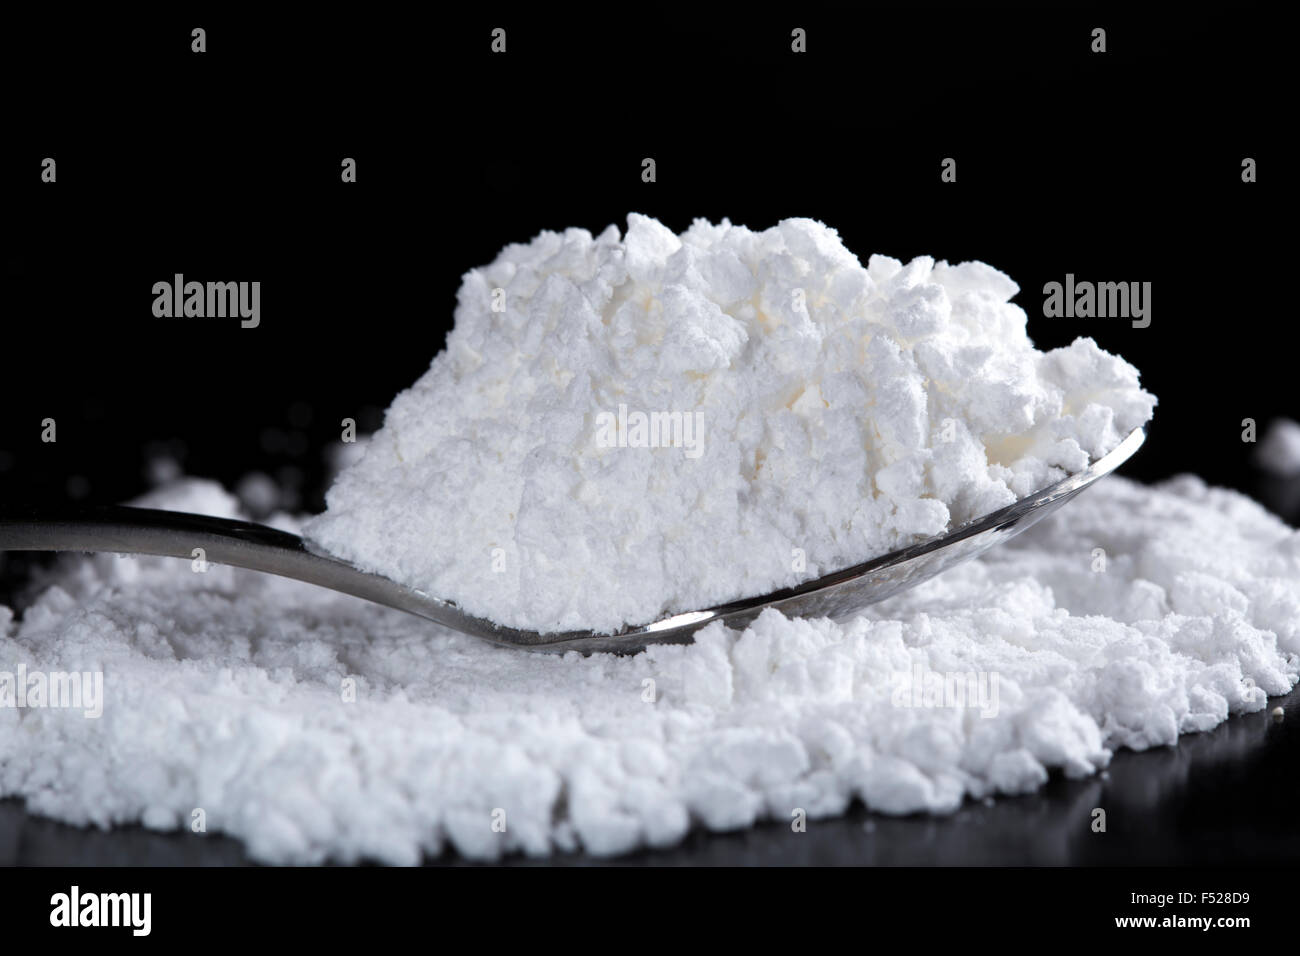 White powder in silver spoon over dark background Stock Photo